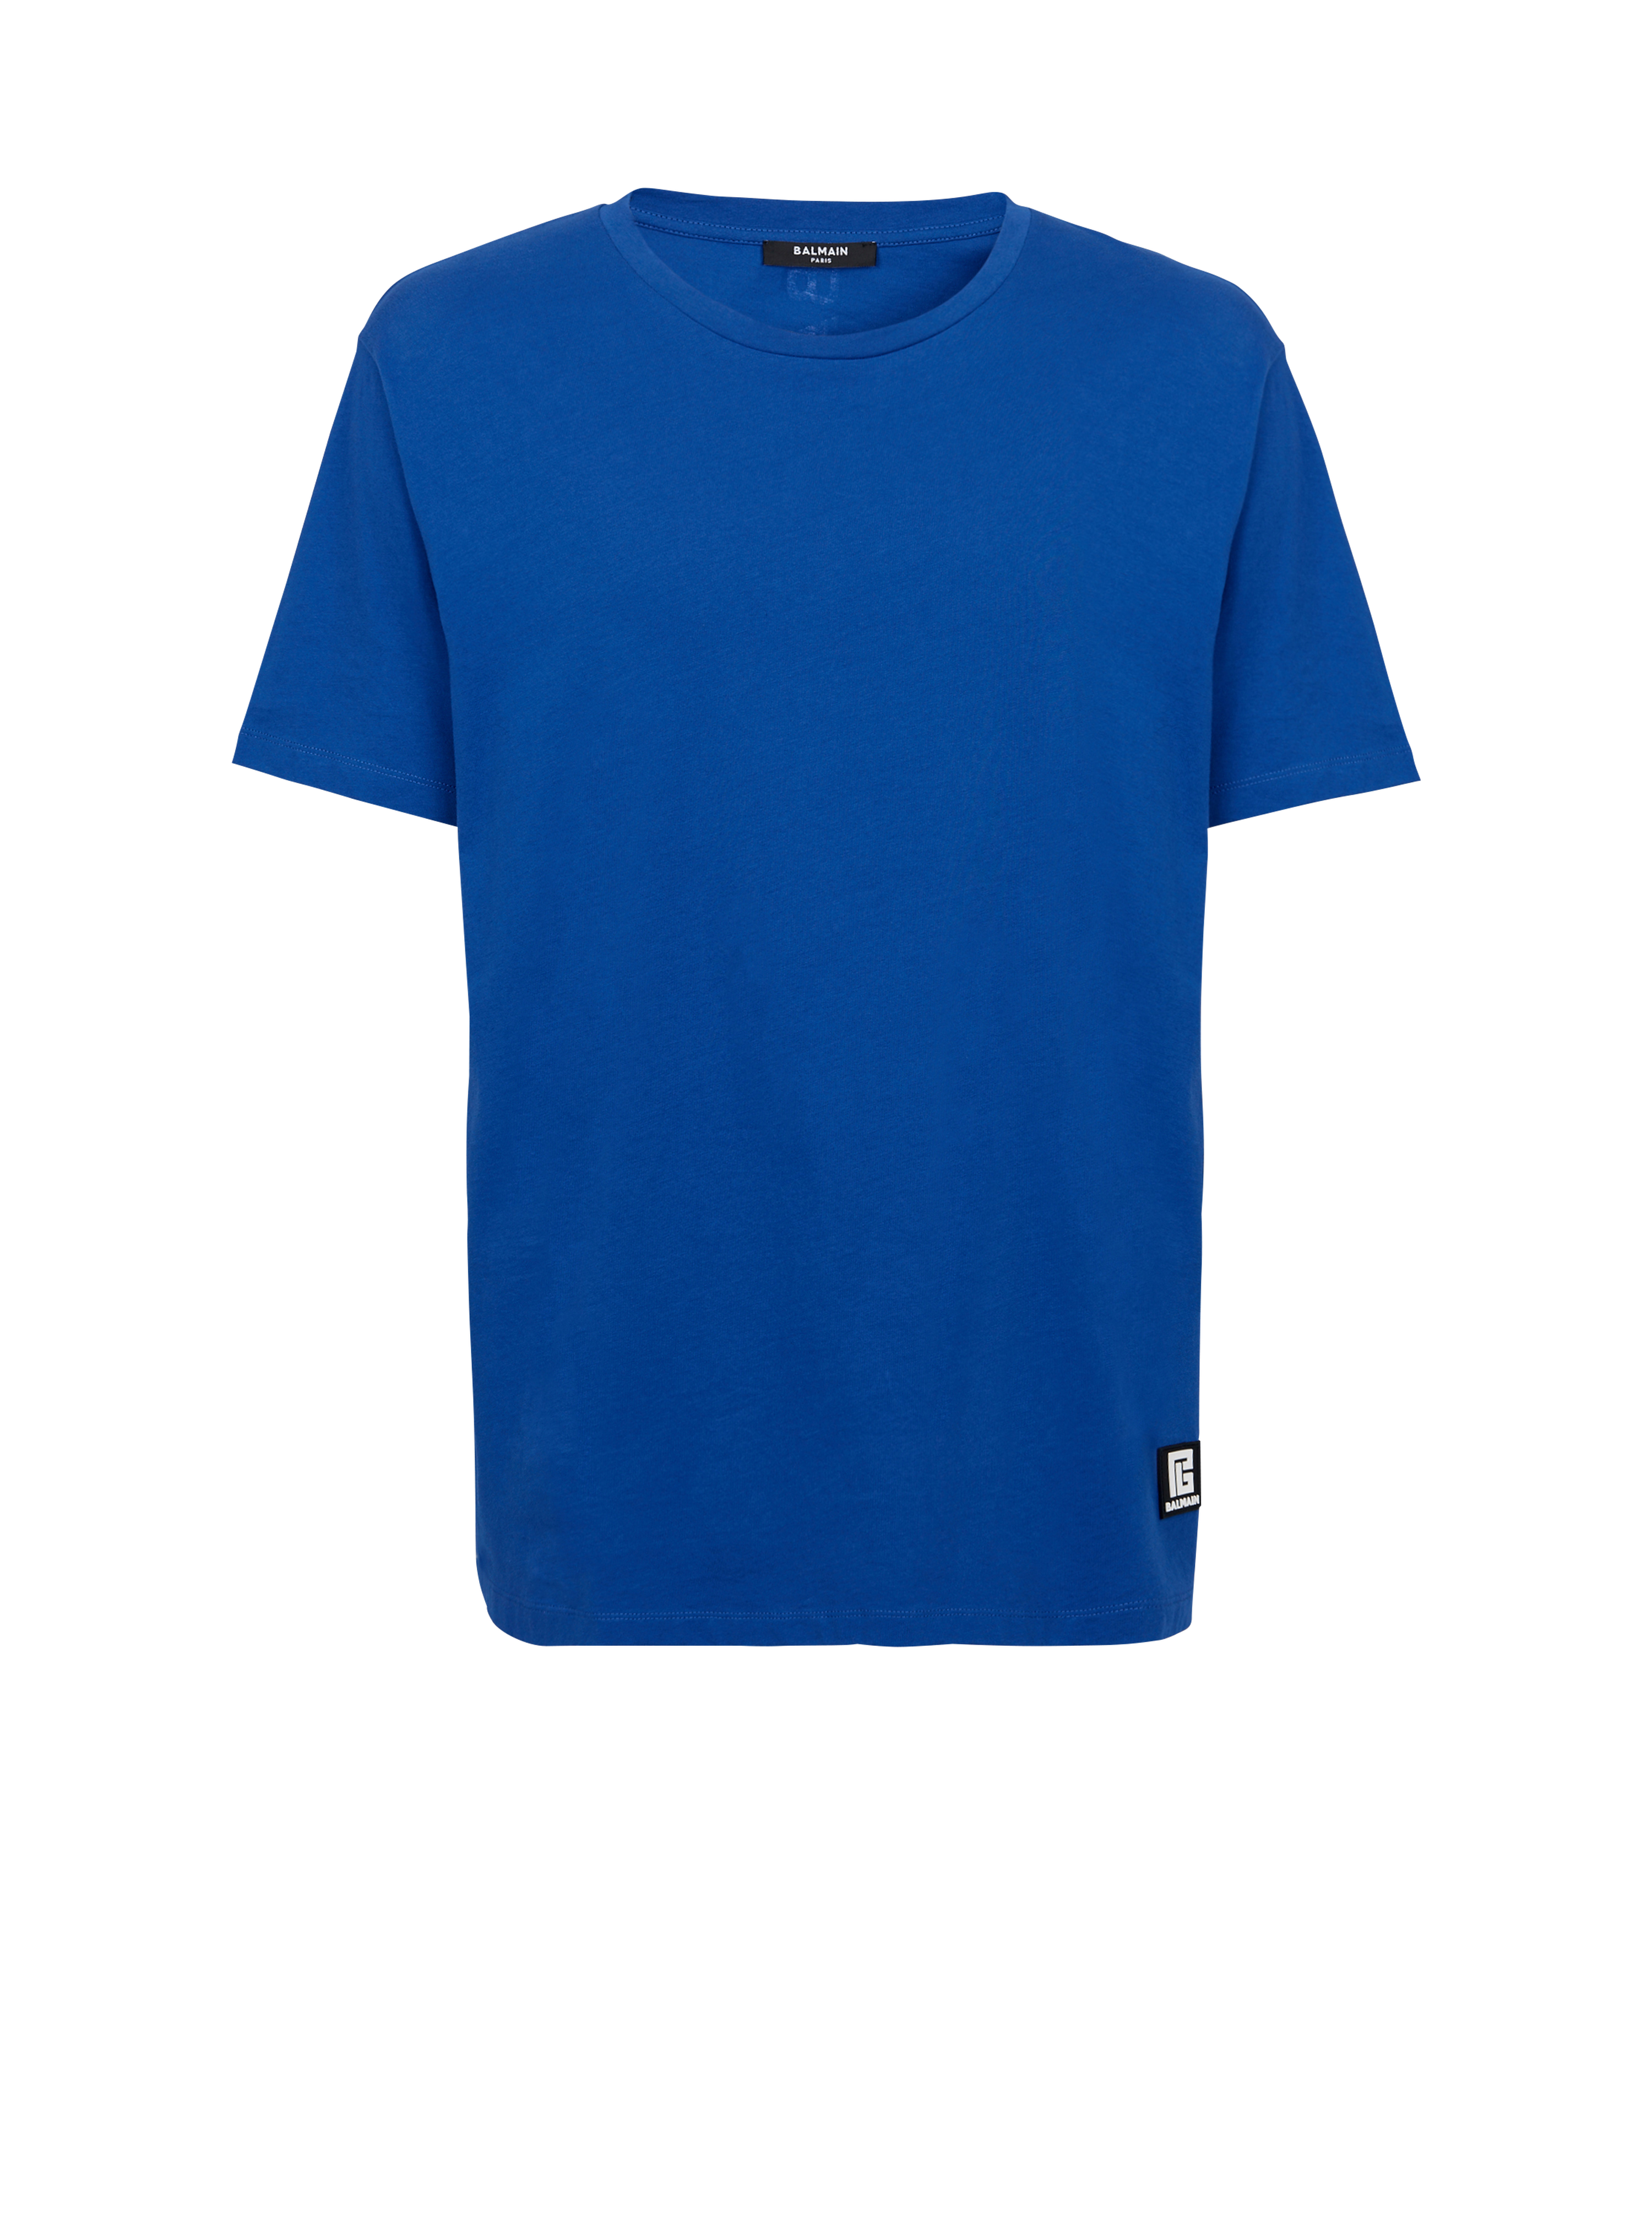 T-shirt oversize en coton imprimé logo Balmain, bleu marine